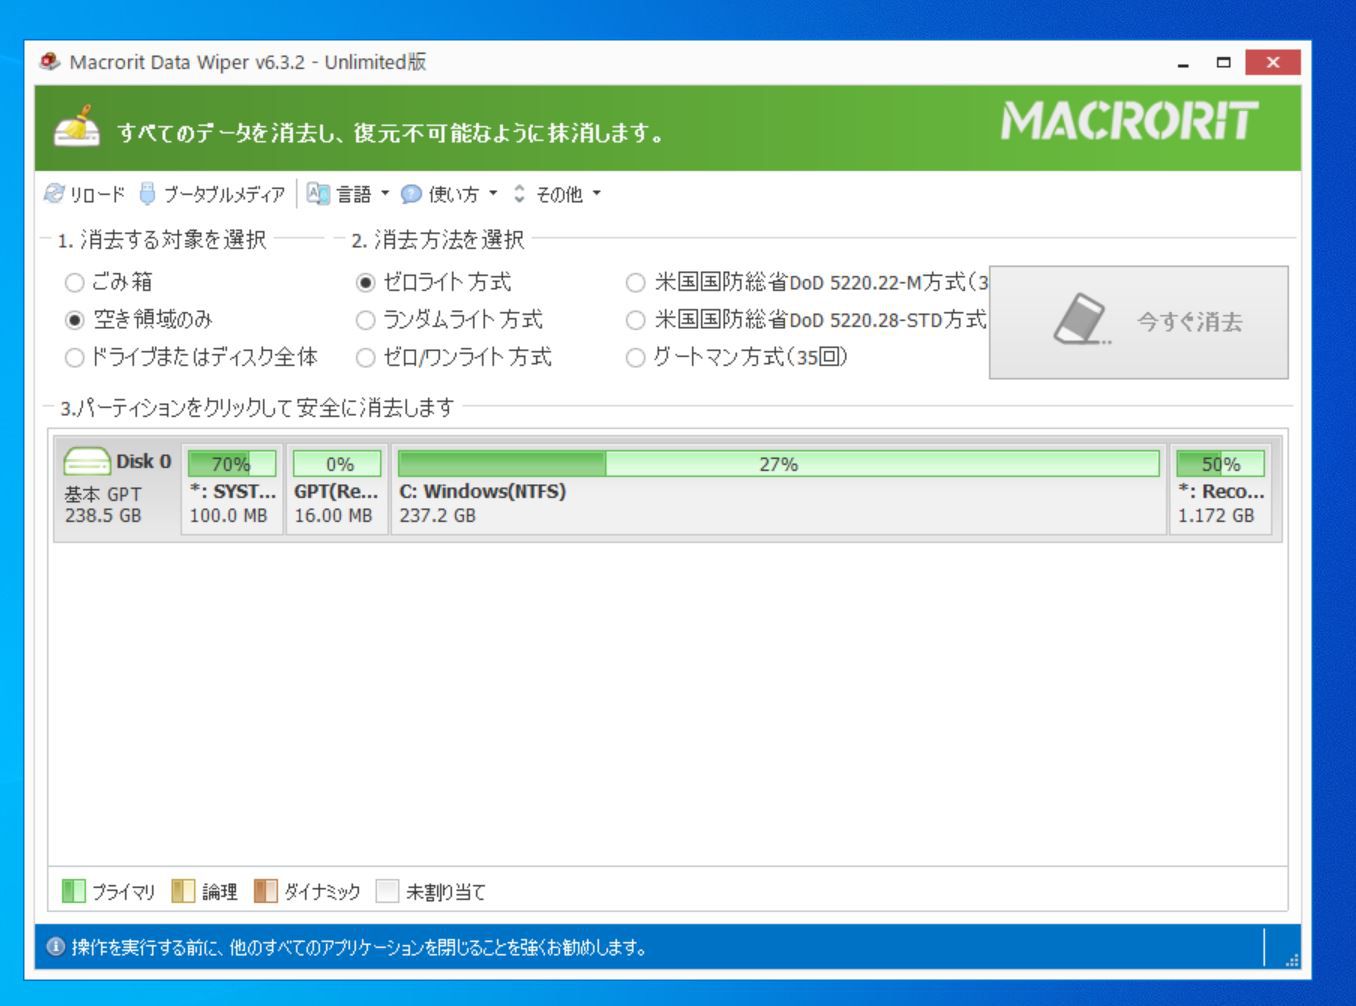 download the last version for ios Macrorit Data Wiper 6.9.9